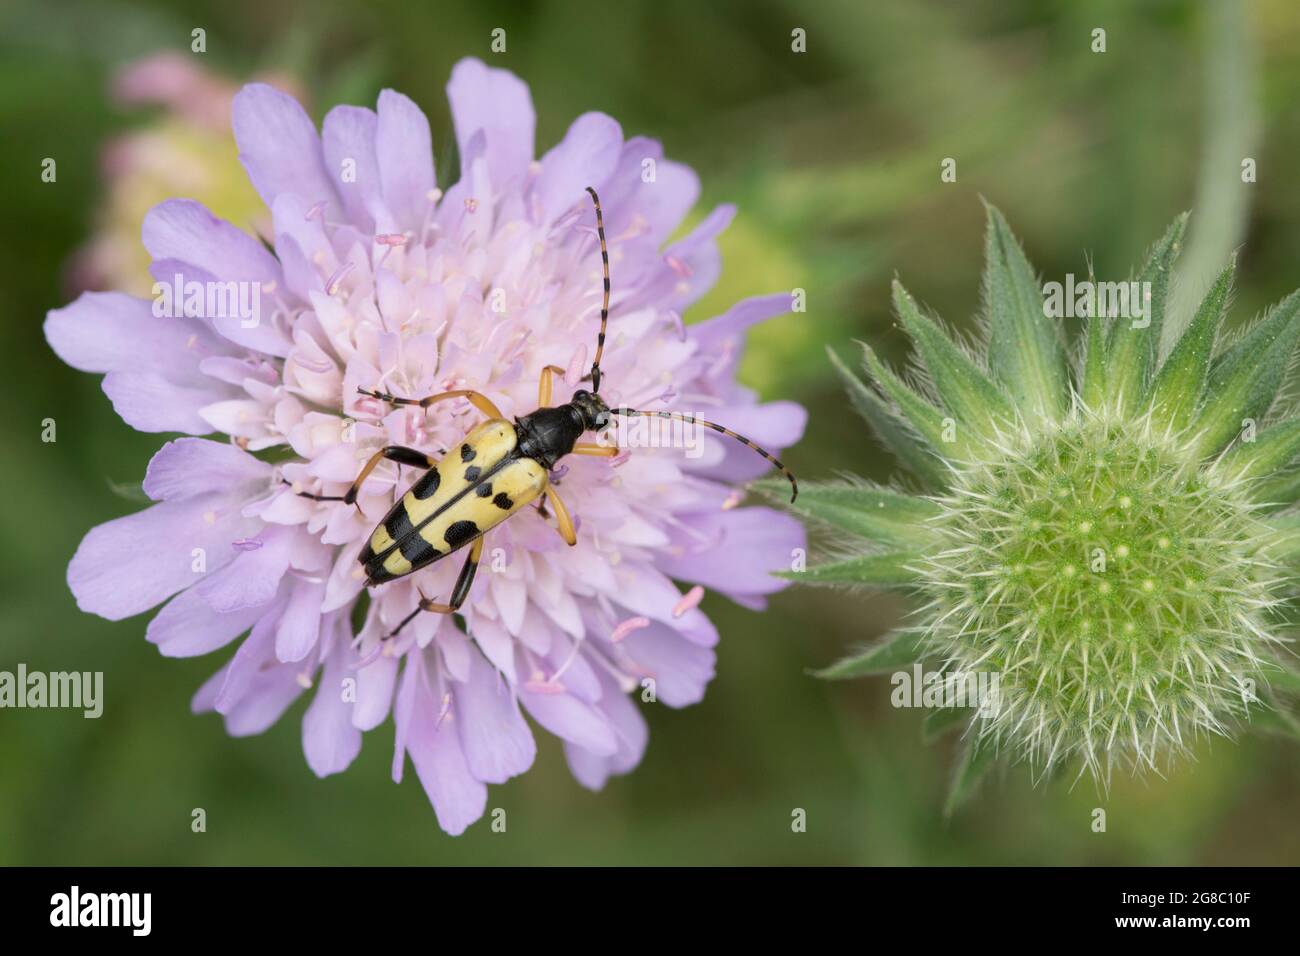 Rutpela maculata, Strangalia maculata, Longhorn beetle, Yellow and Black Longhorn Beetle, feeding on Field Scabious, Knautia arvensis, July, UK. Stock Photo